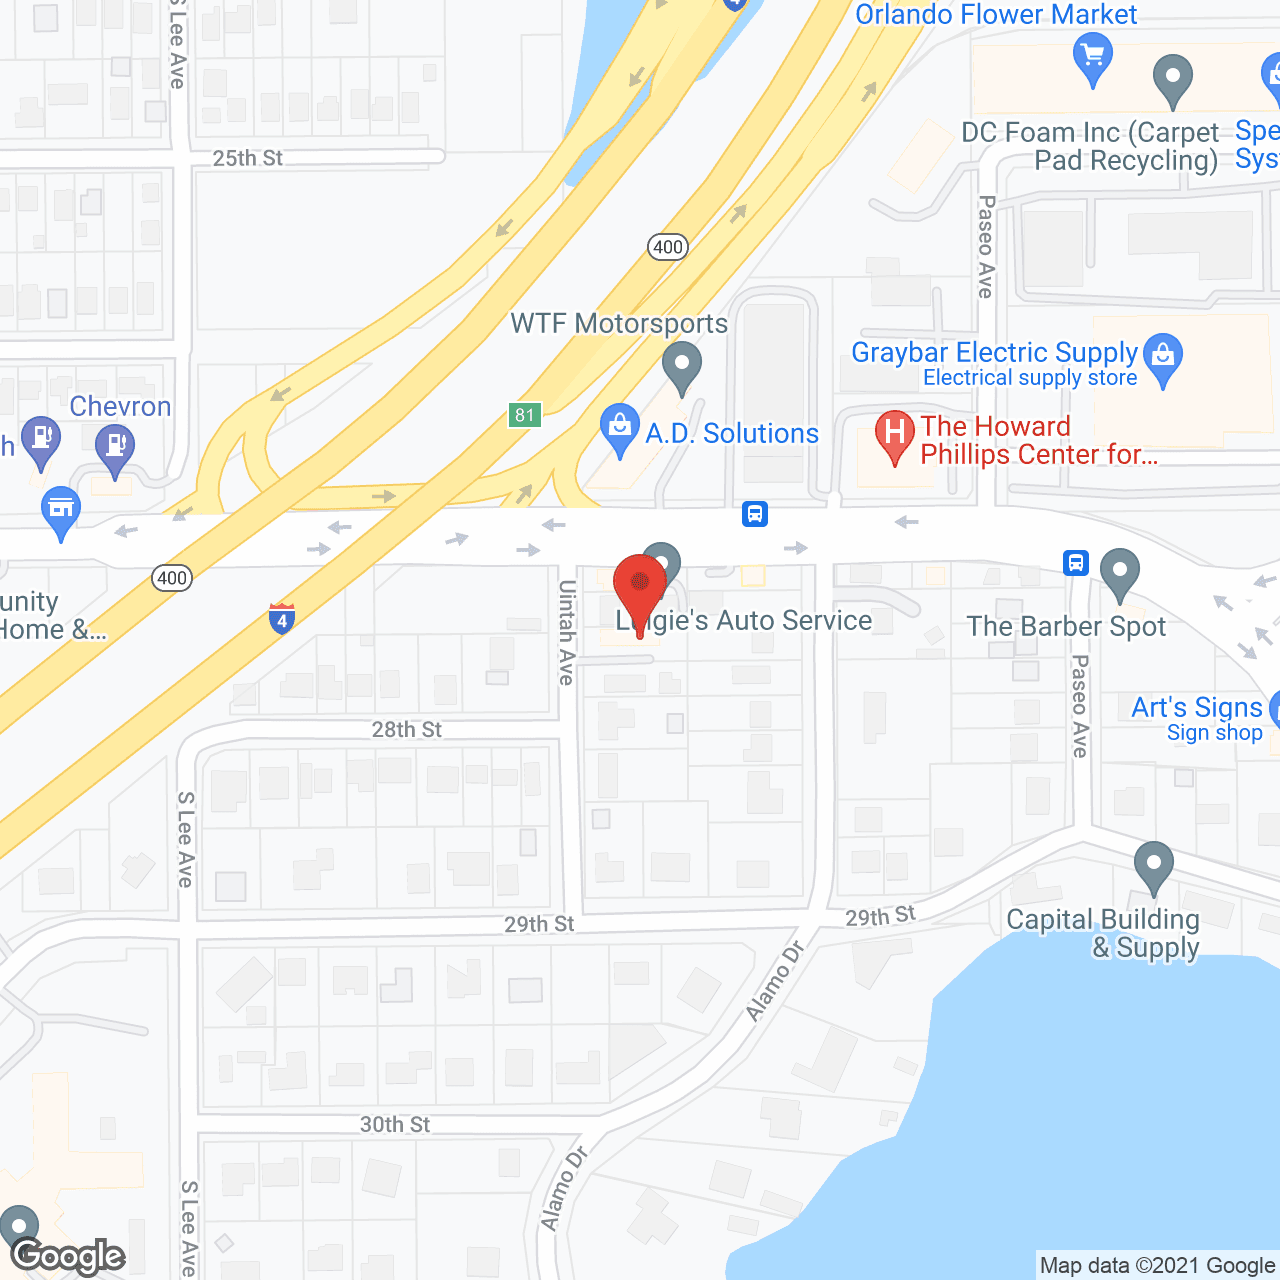 Orlando Living Ctr in google map